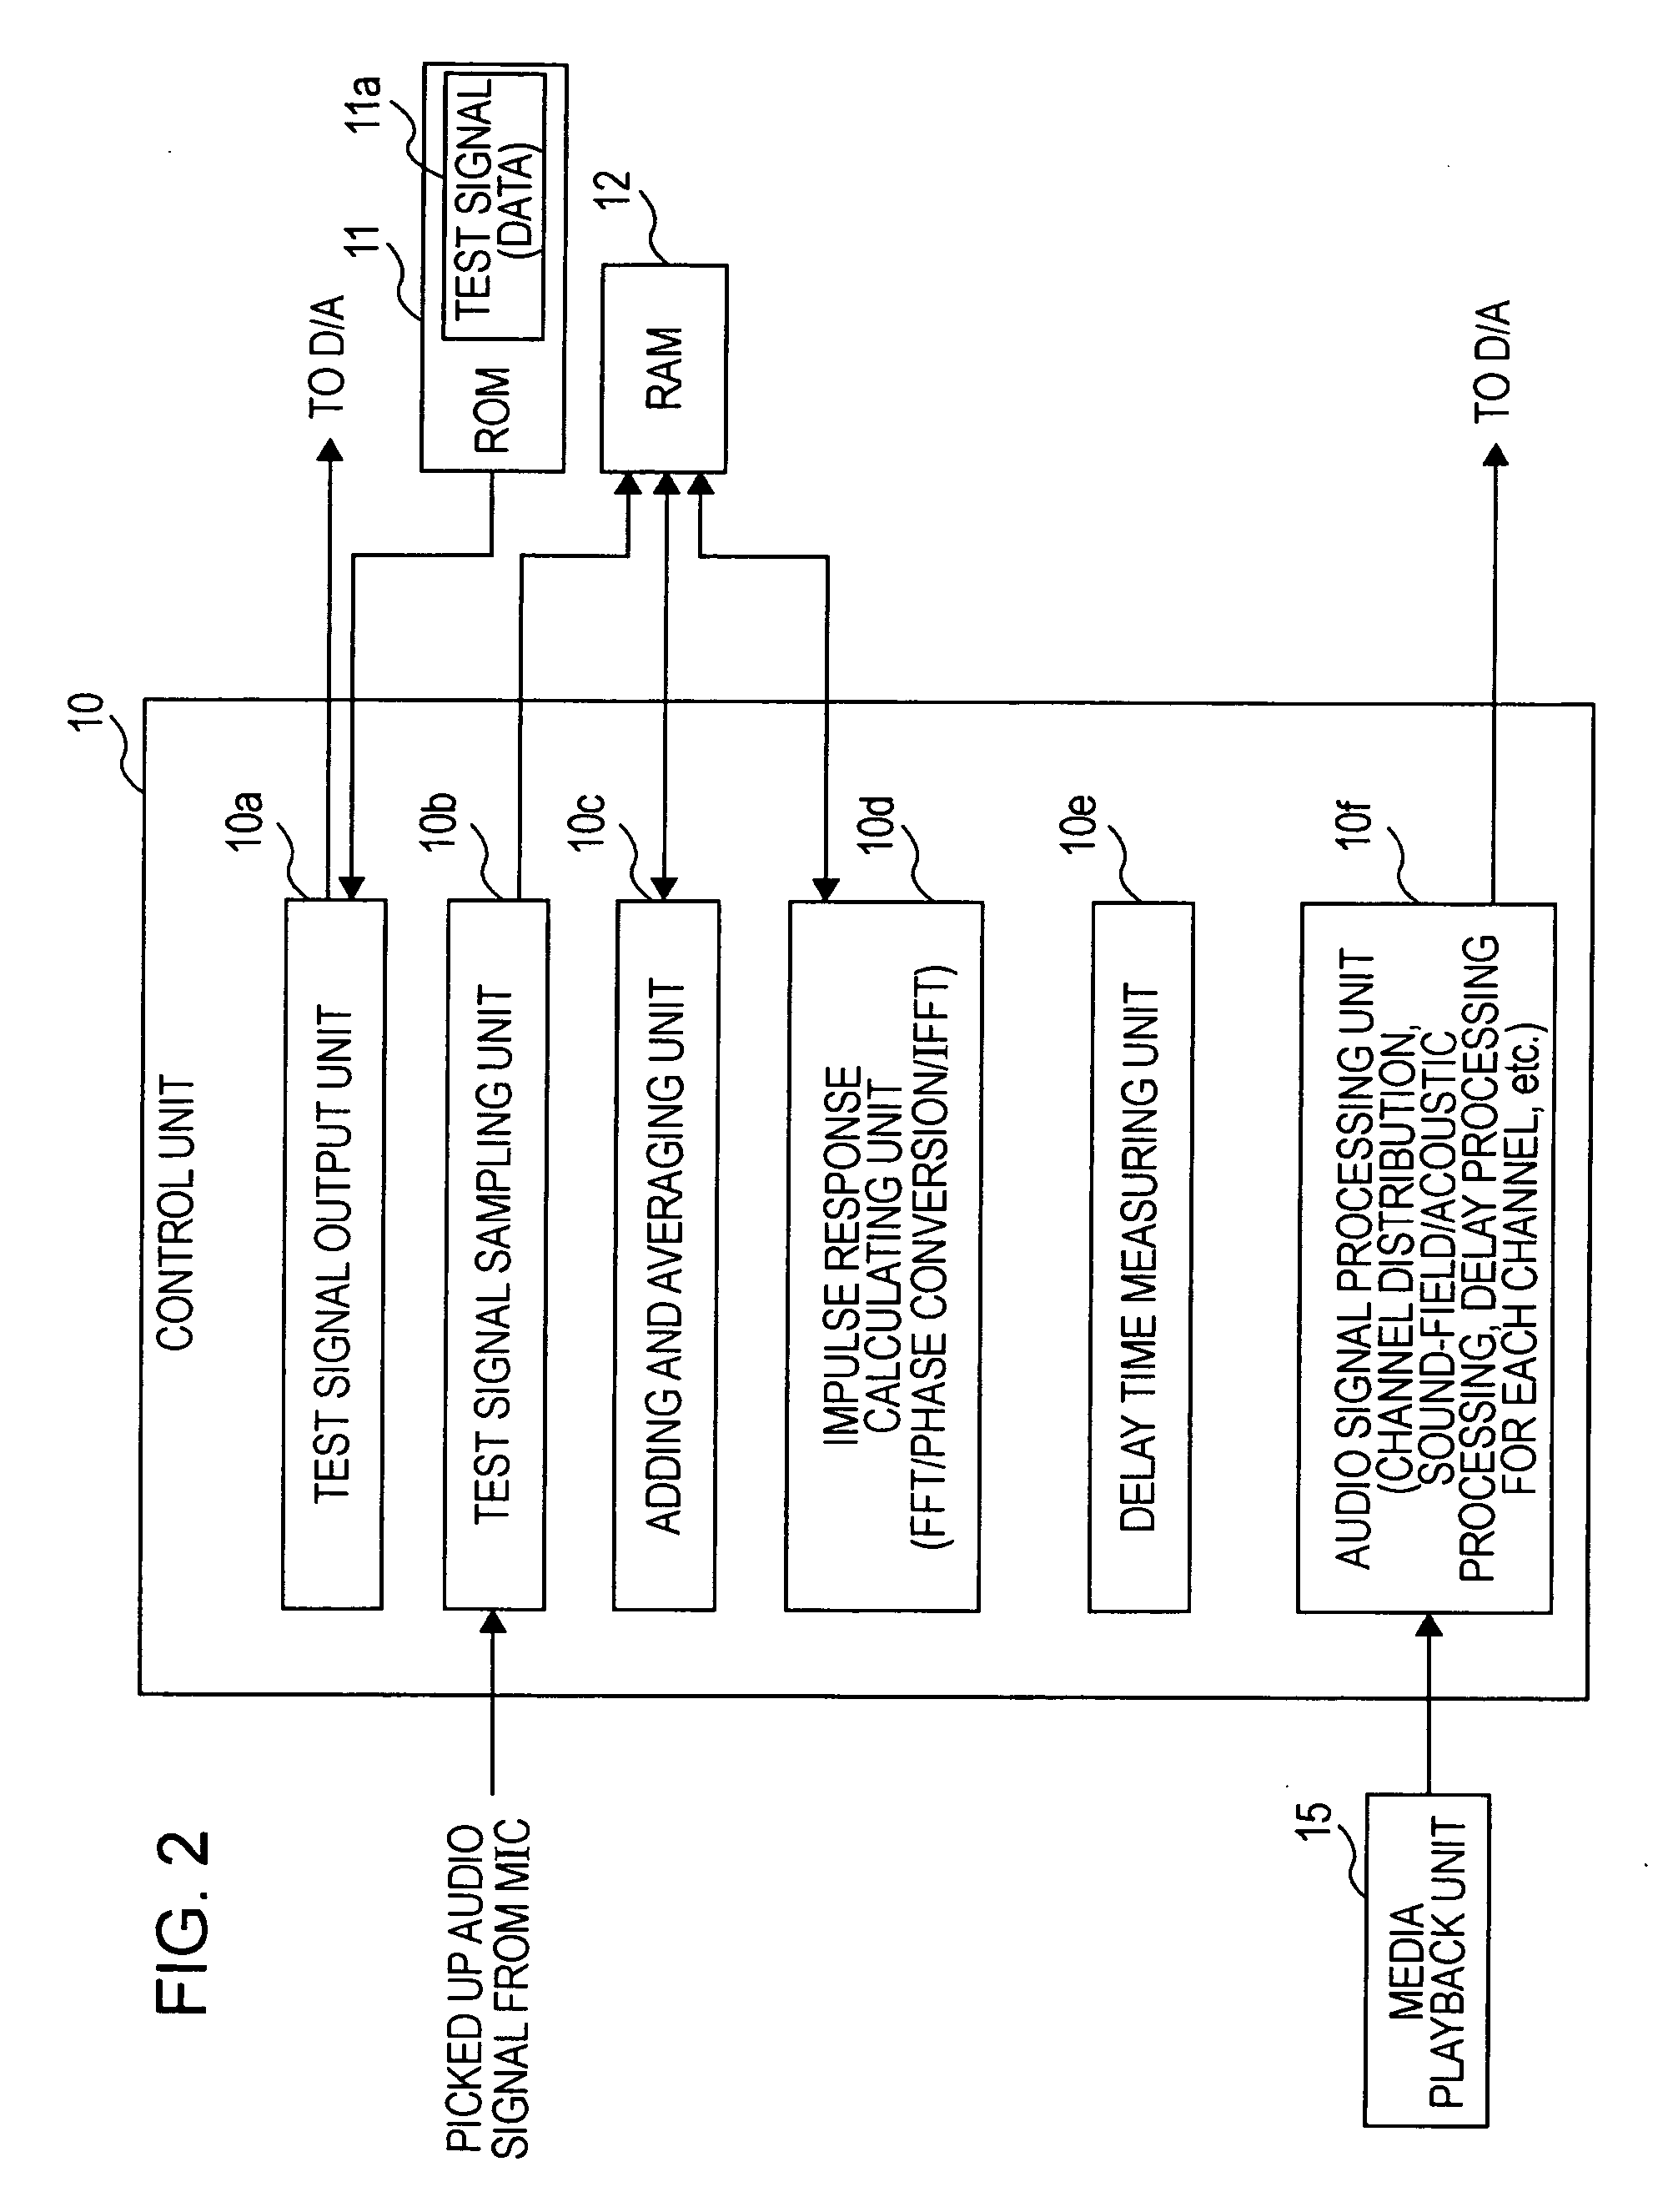 Sound measuring apparatus and method, and audio signal processing apparatus